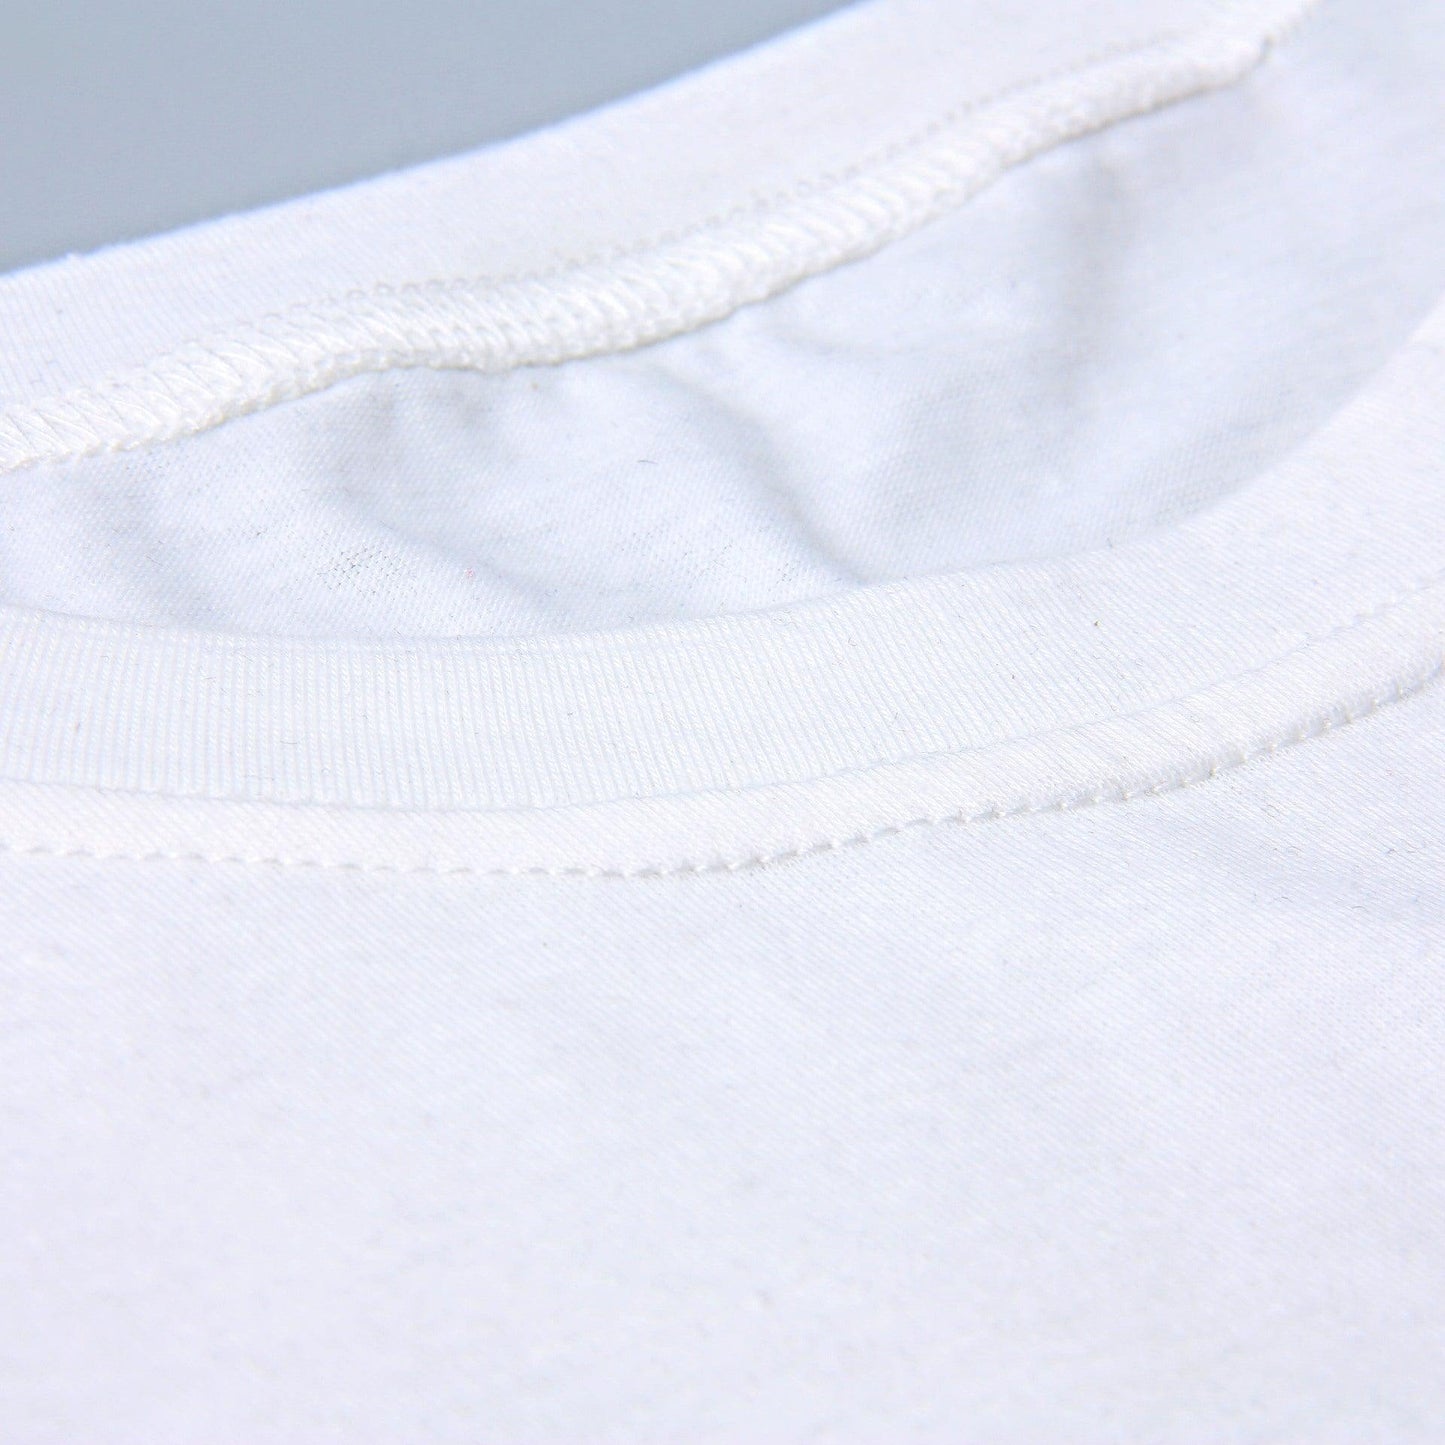 Fox Print T-Shirt Round Neck Short-Sleeved T-Shirt - BUNNY BAZAR